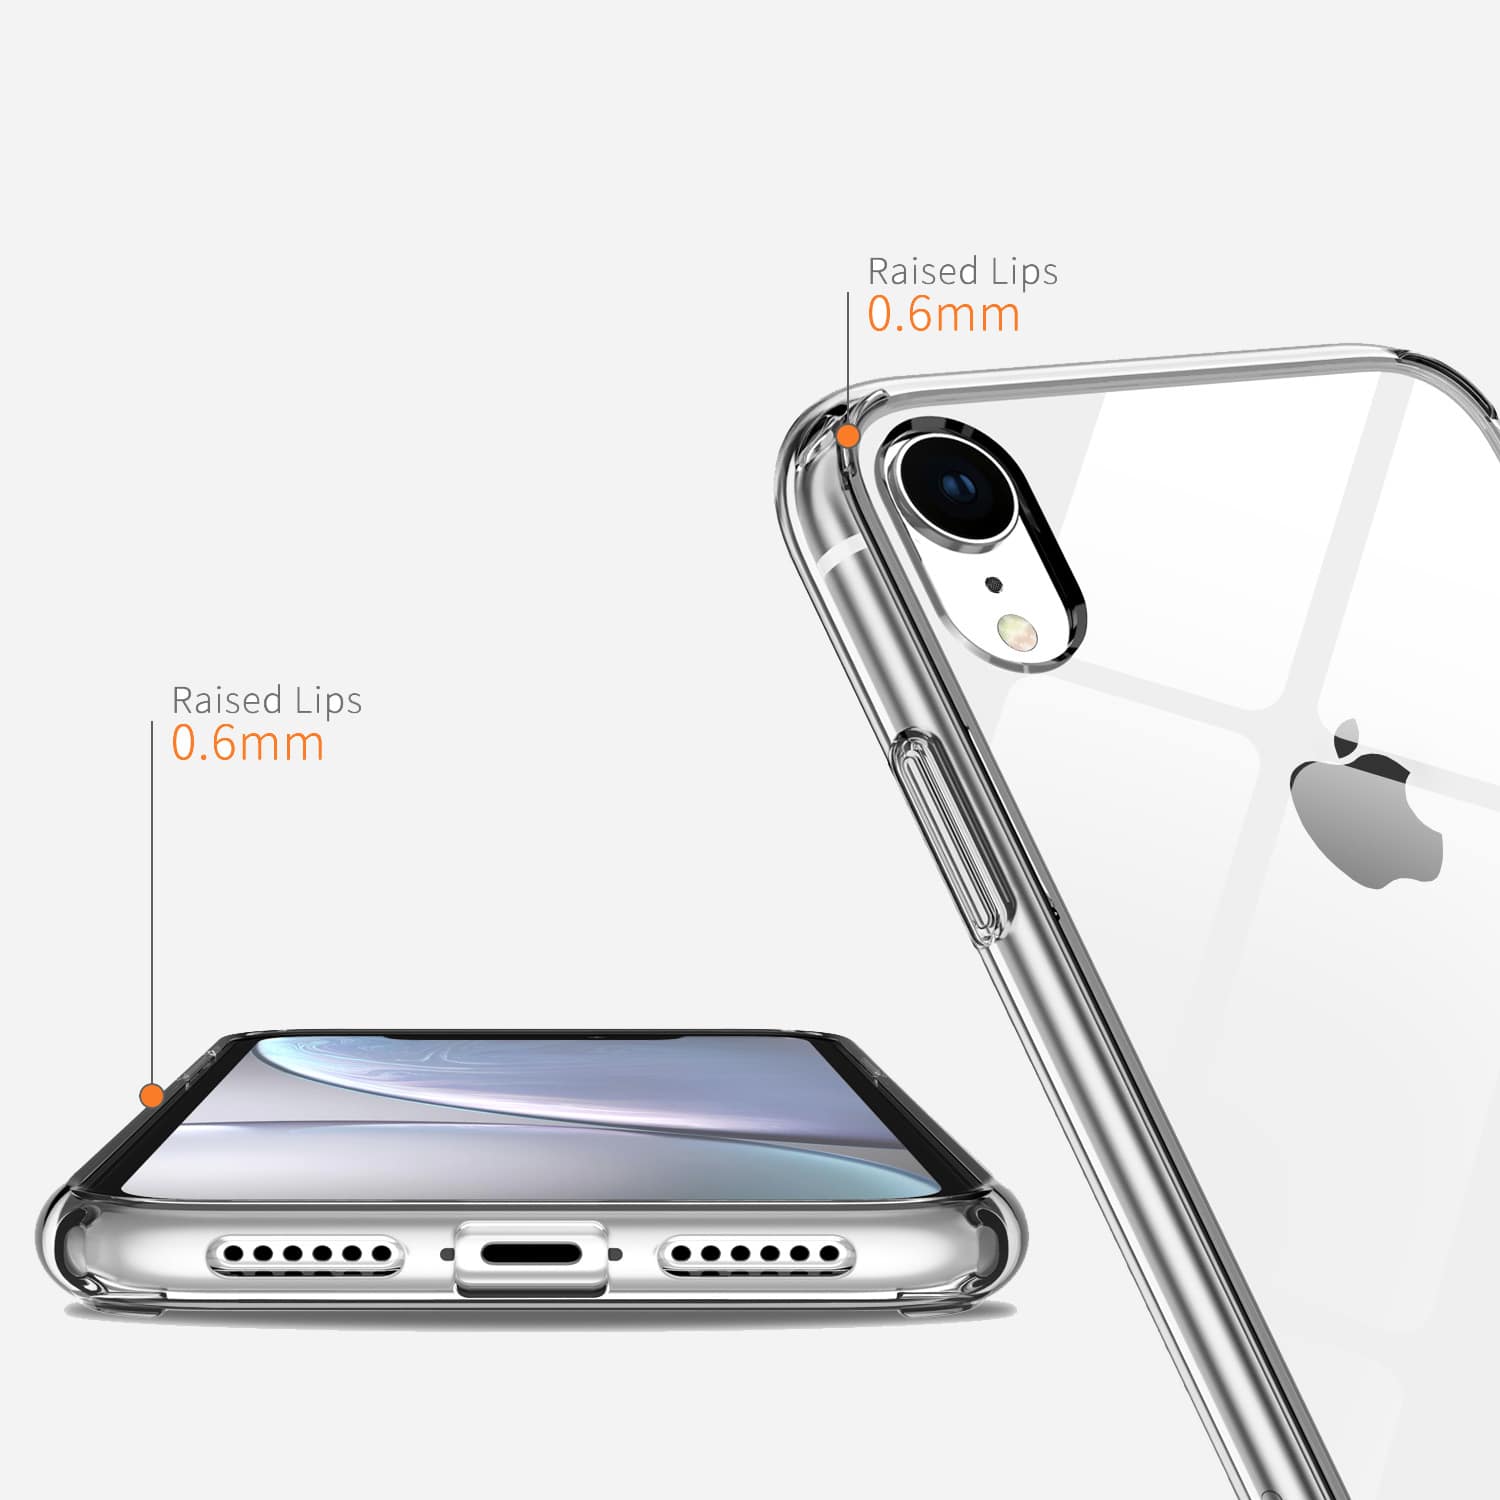 iPhone X Cases in iPhone Cases 